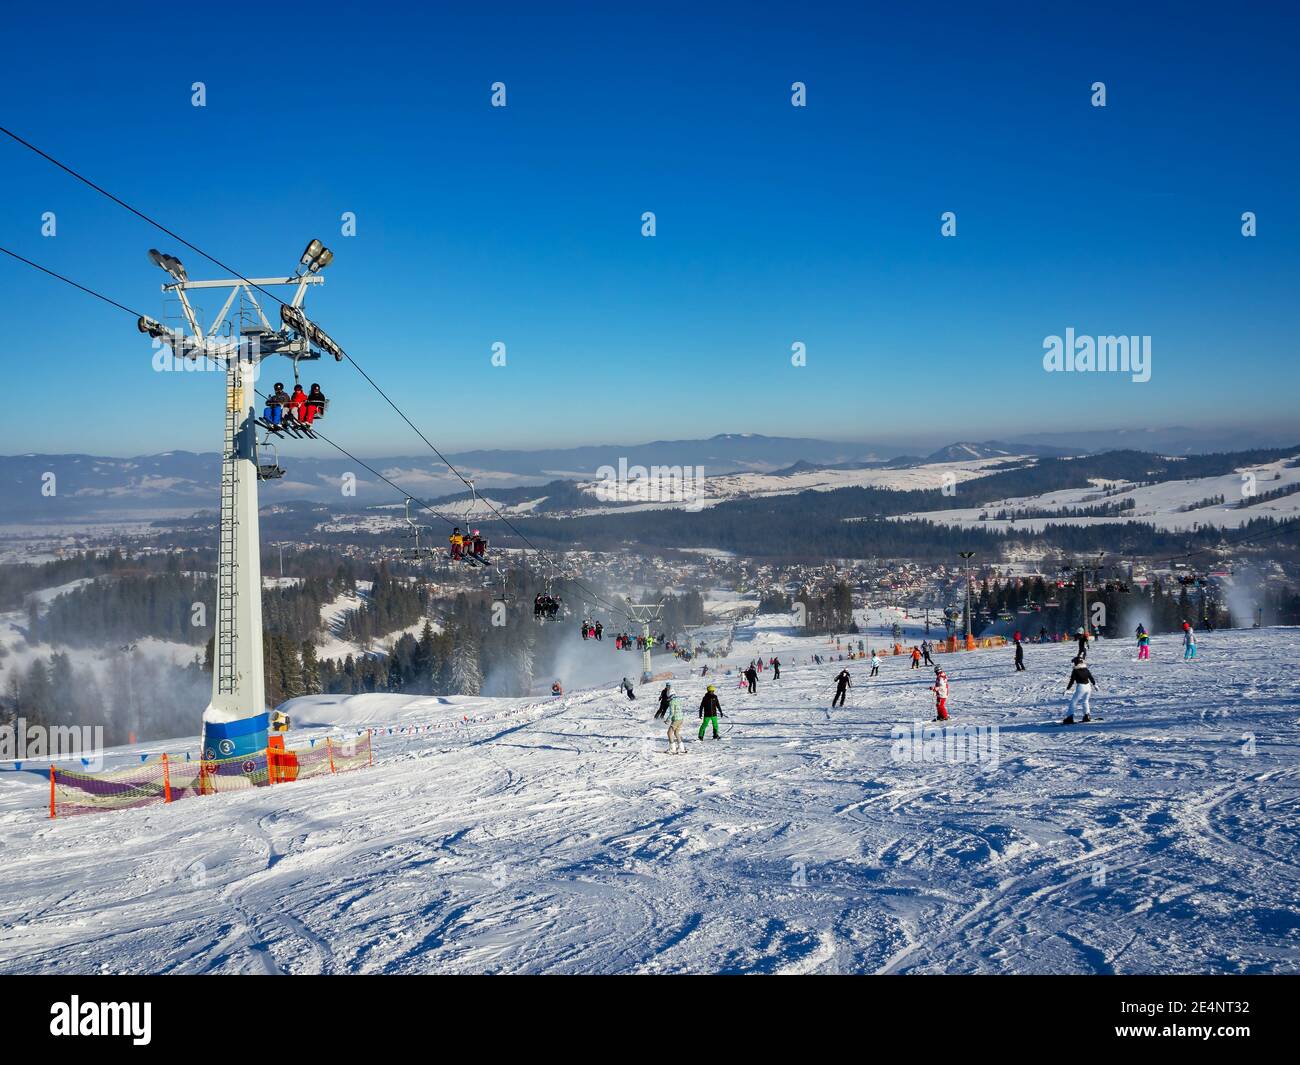 Ski slope, chairlift, skiers and snowboarders in Bialka Tatrzanska ski resort in Poland in winter. Snow cannons in action Stock Photo